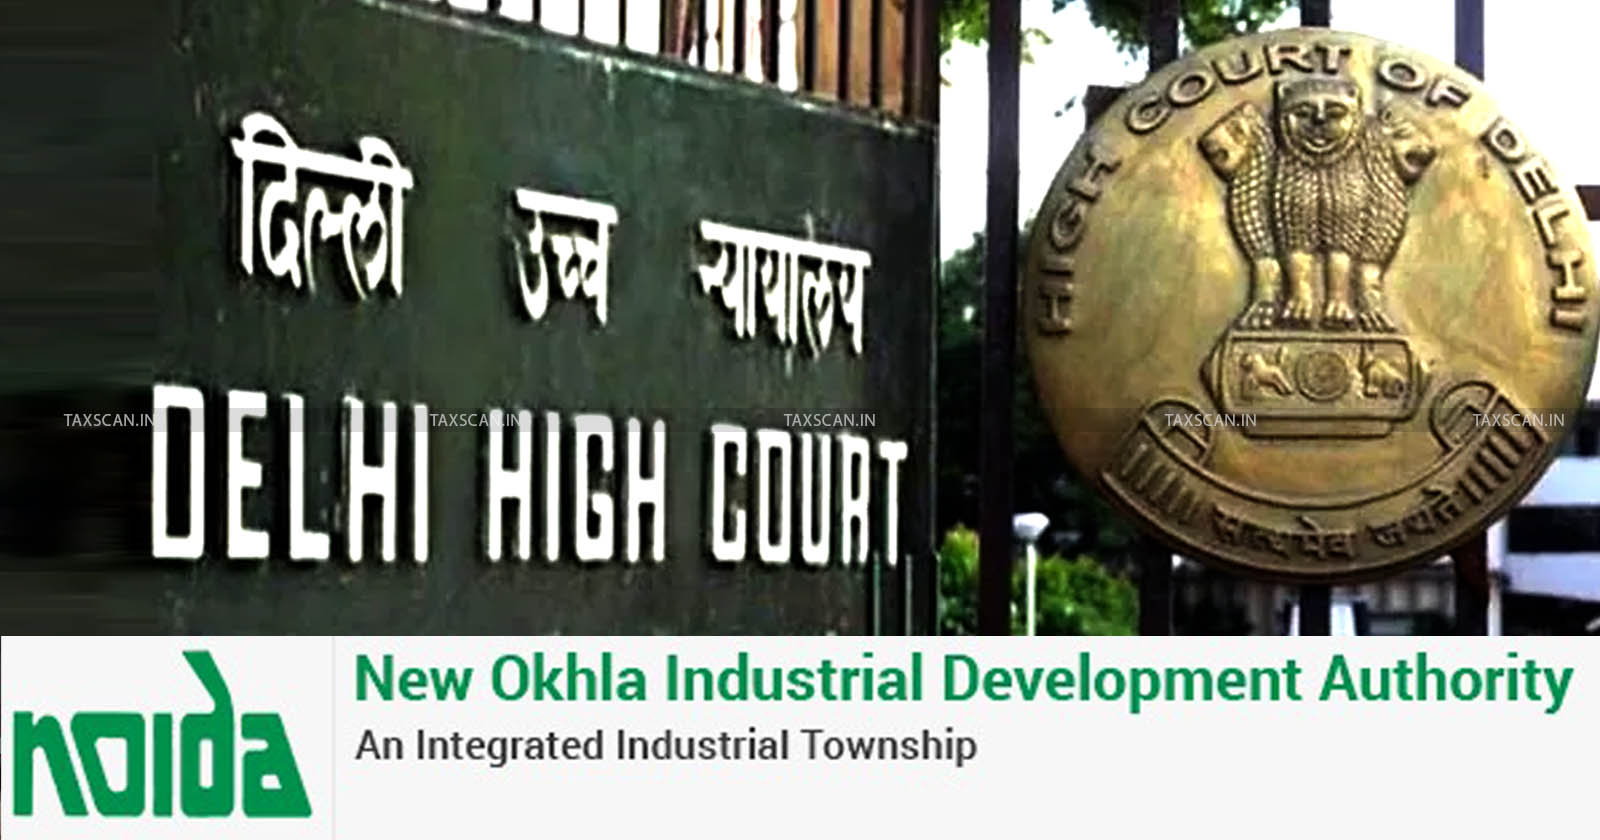 NOIDA - Body Corporate - Uttar Pradesh Industrial Area Development Act - Delhi HC - quashes - Service Tax demand - executed work contracts - taxscan